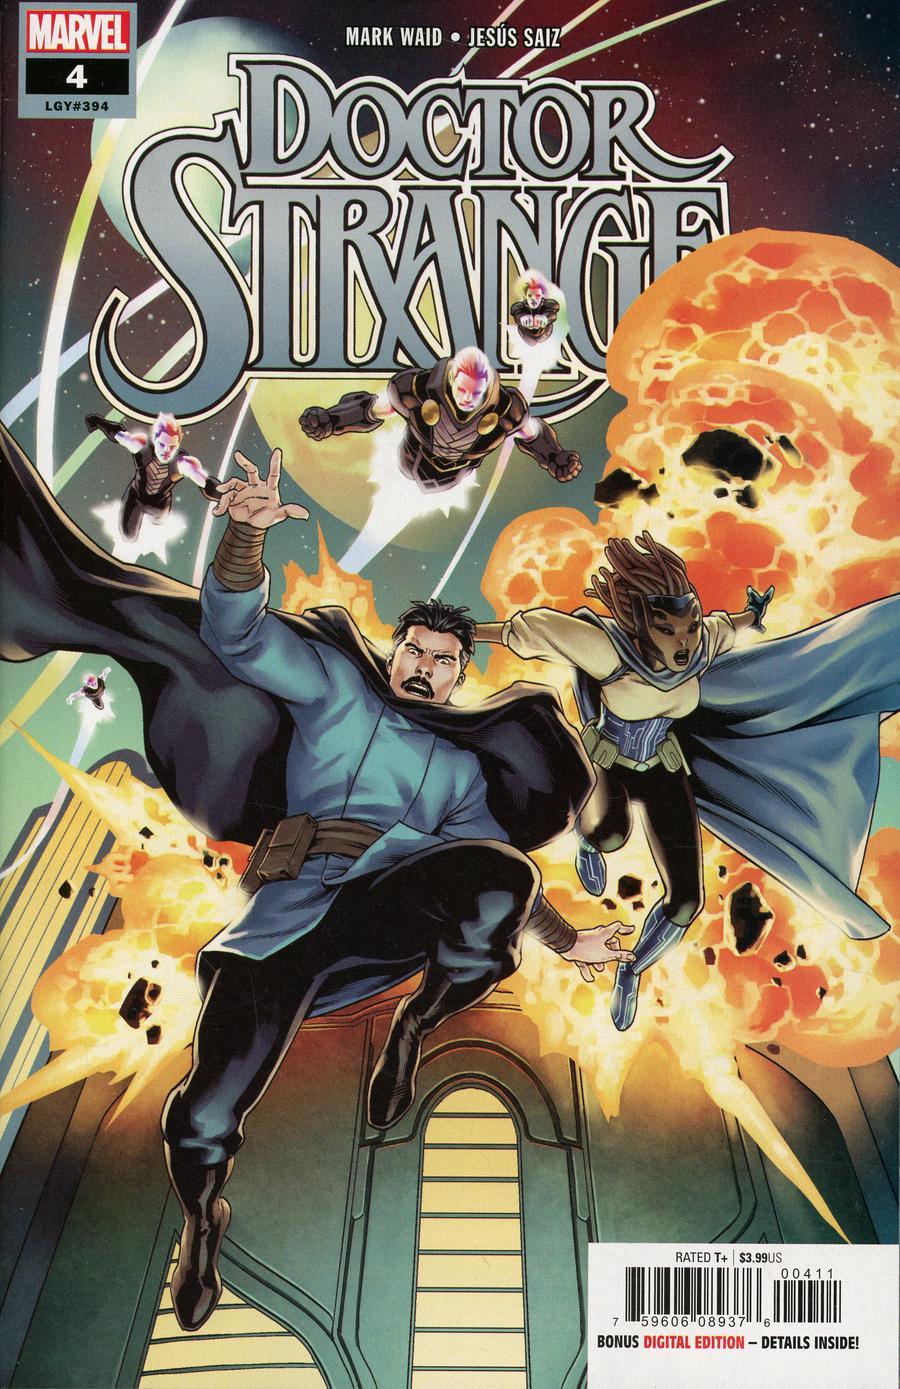 Doctor Strange Vol. 5 #4